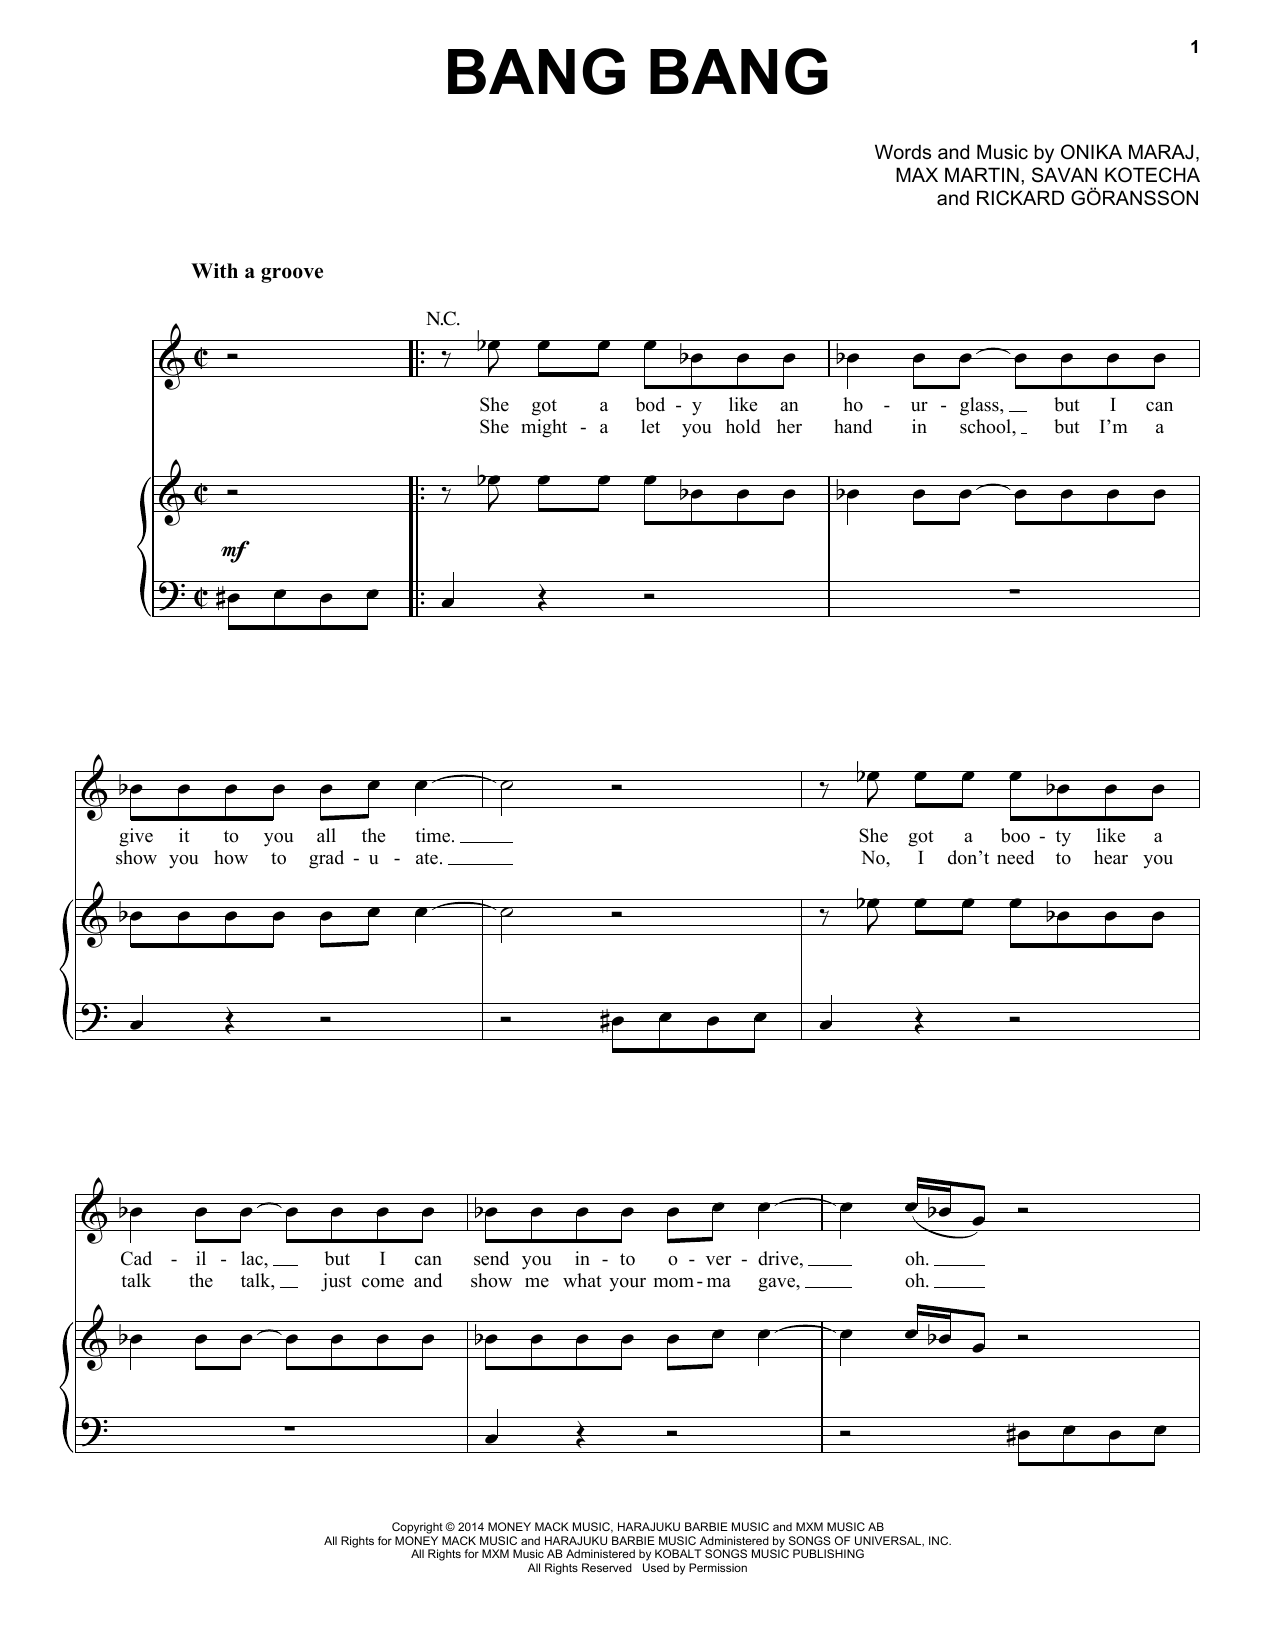 Jessie J, Ariana Grande & Nicki Minaj Bang Bang Sheet Music Notes & Chords for Easy Piano - Download or Print PDF